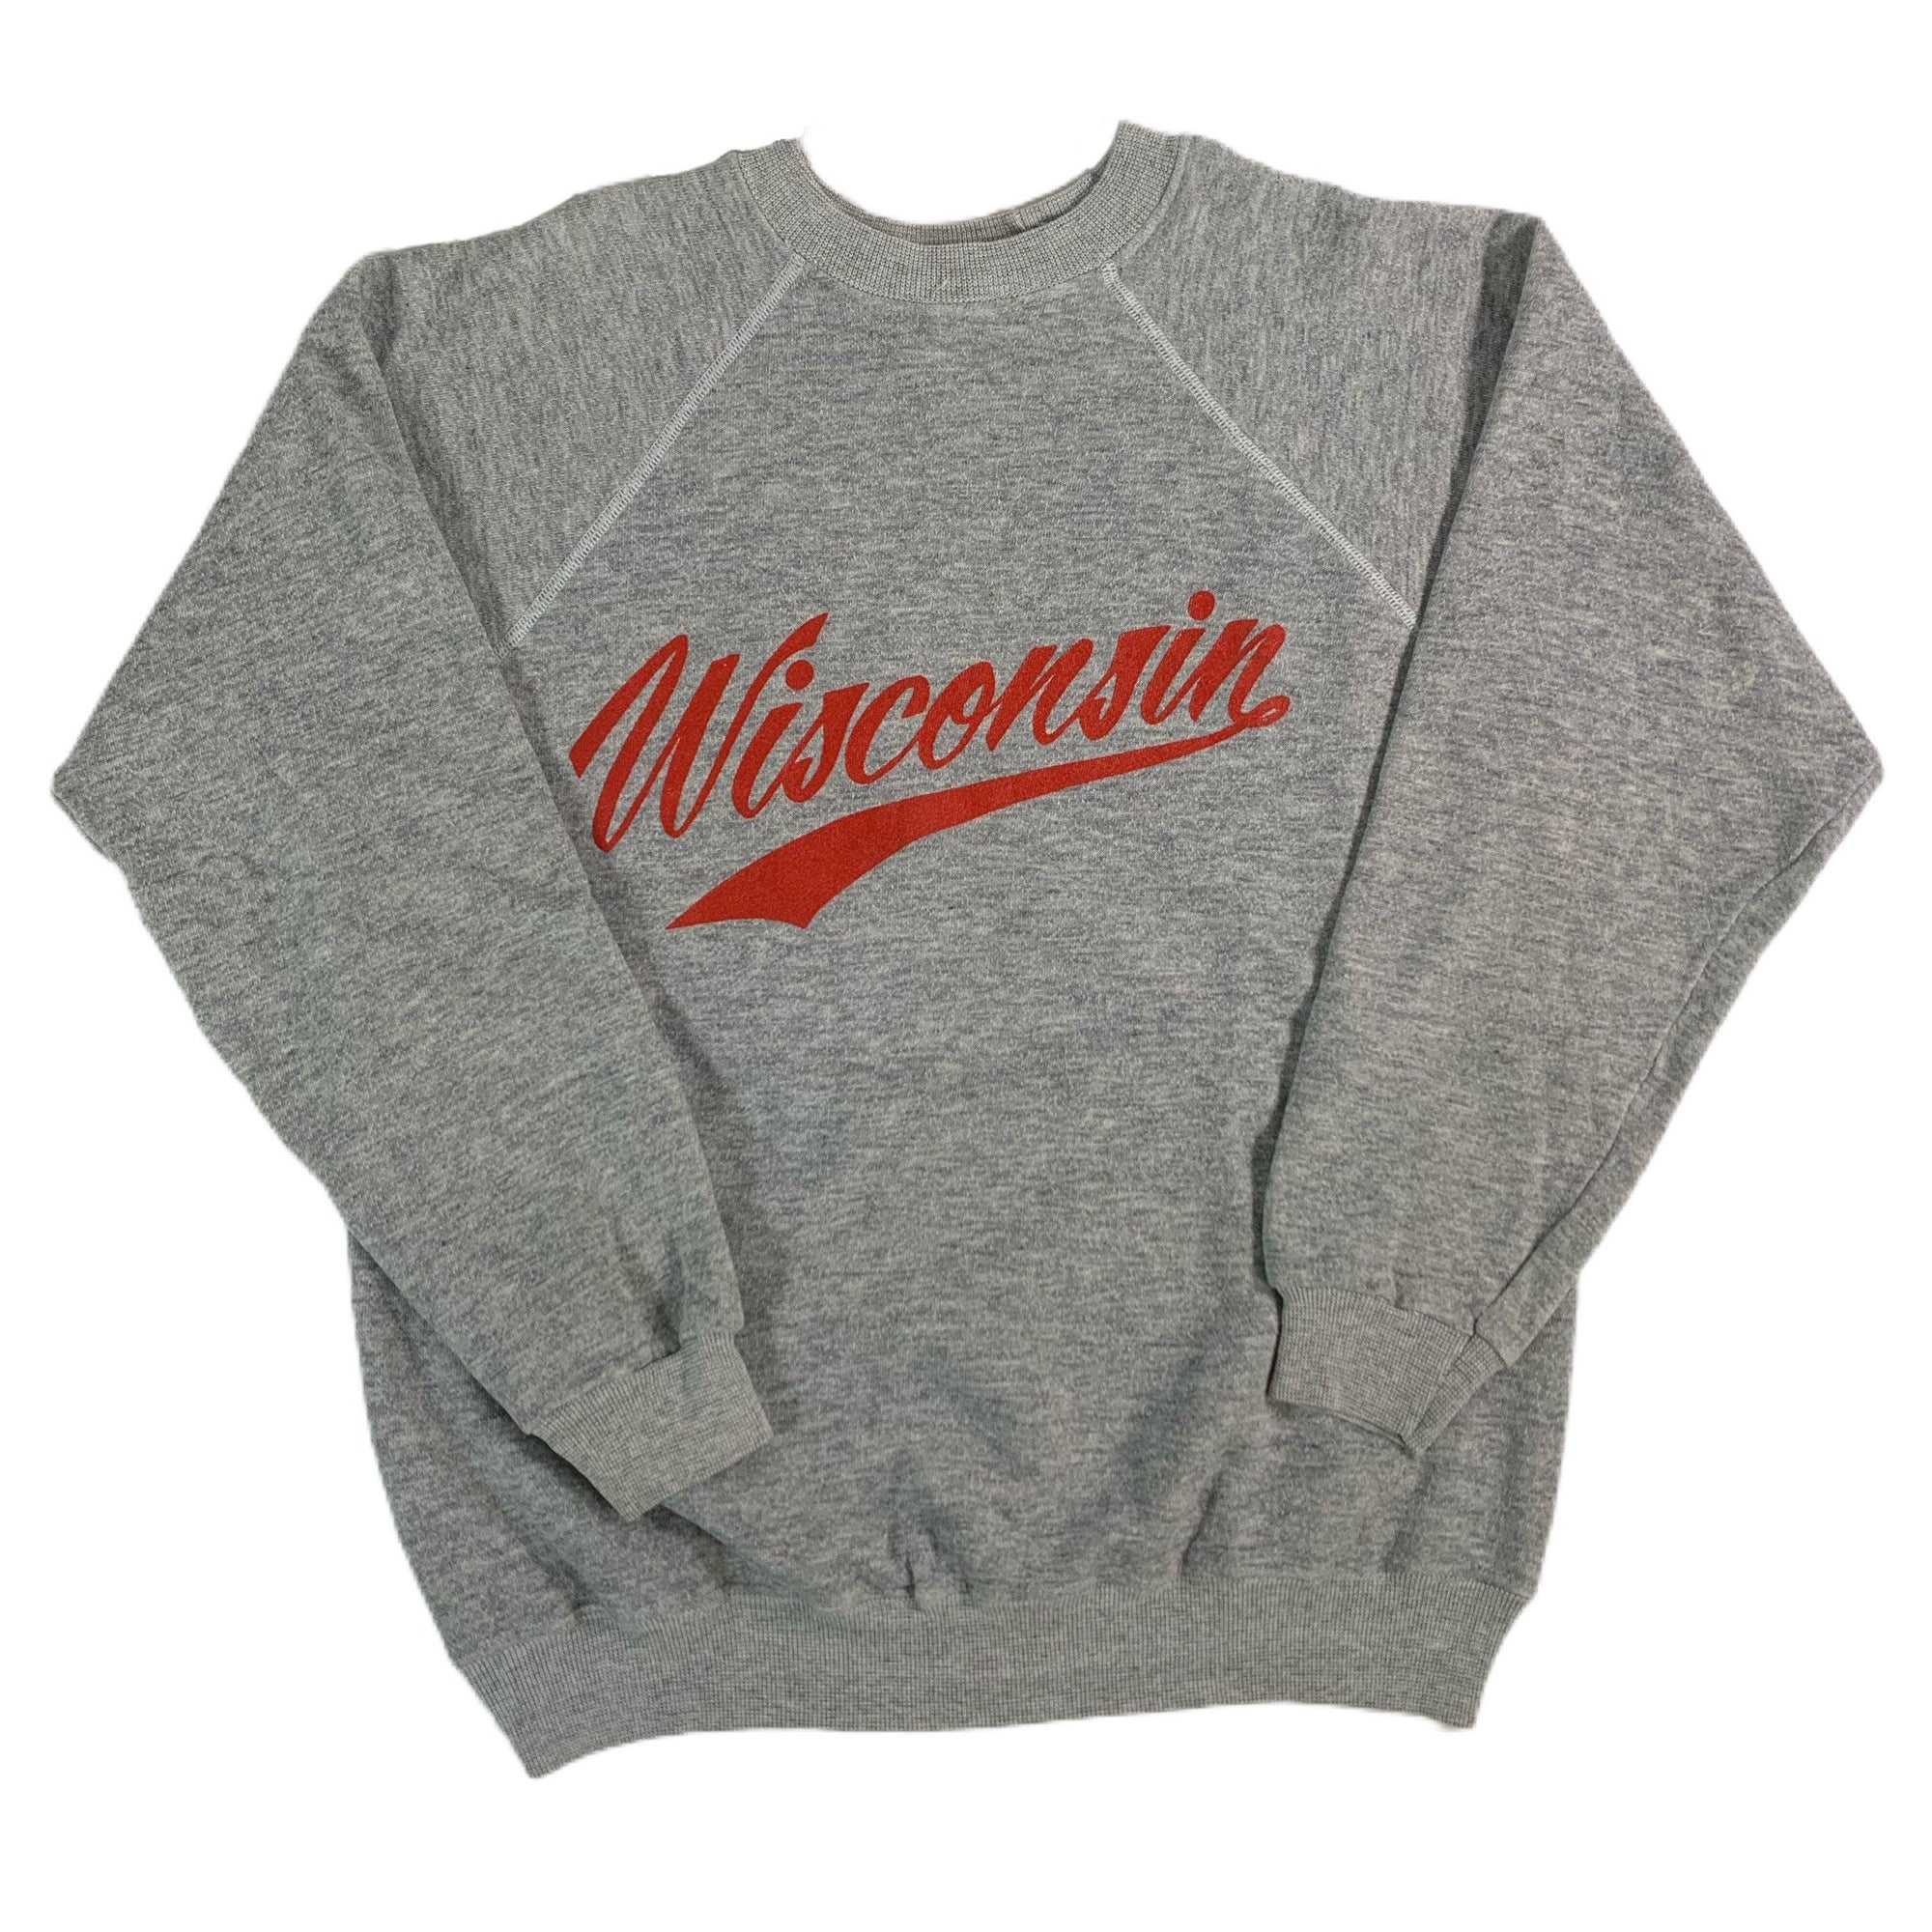 Vintage Wisconsin "Tri blend" Raglan Sweatshirt - jointcustodydc